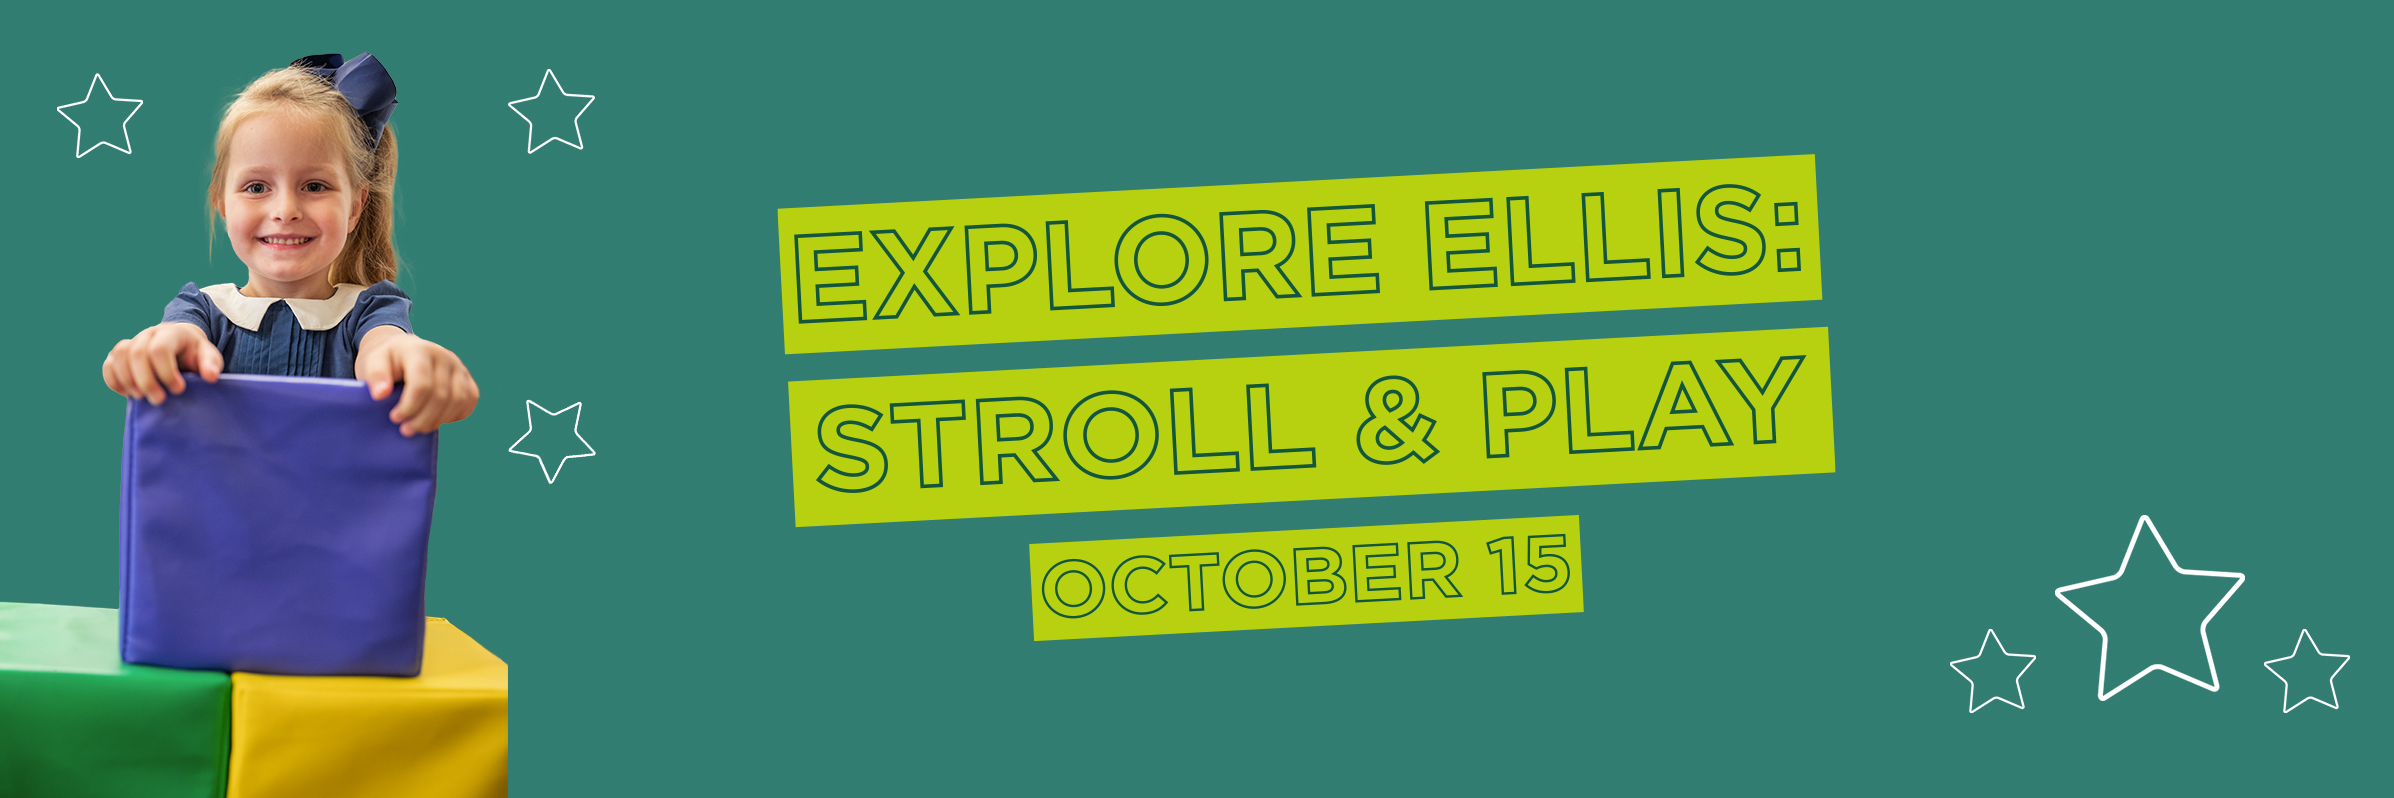 Explore Ellis: Stroll & Play on October 15